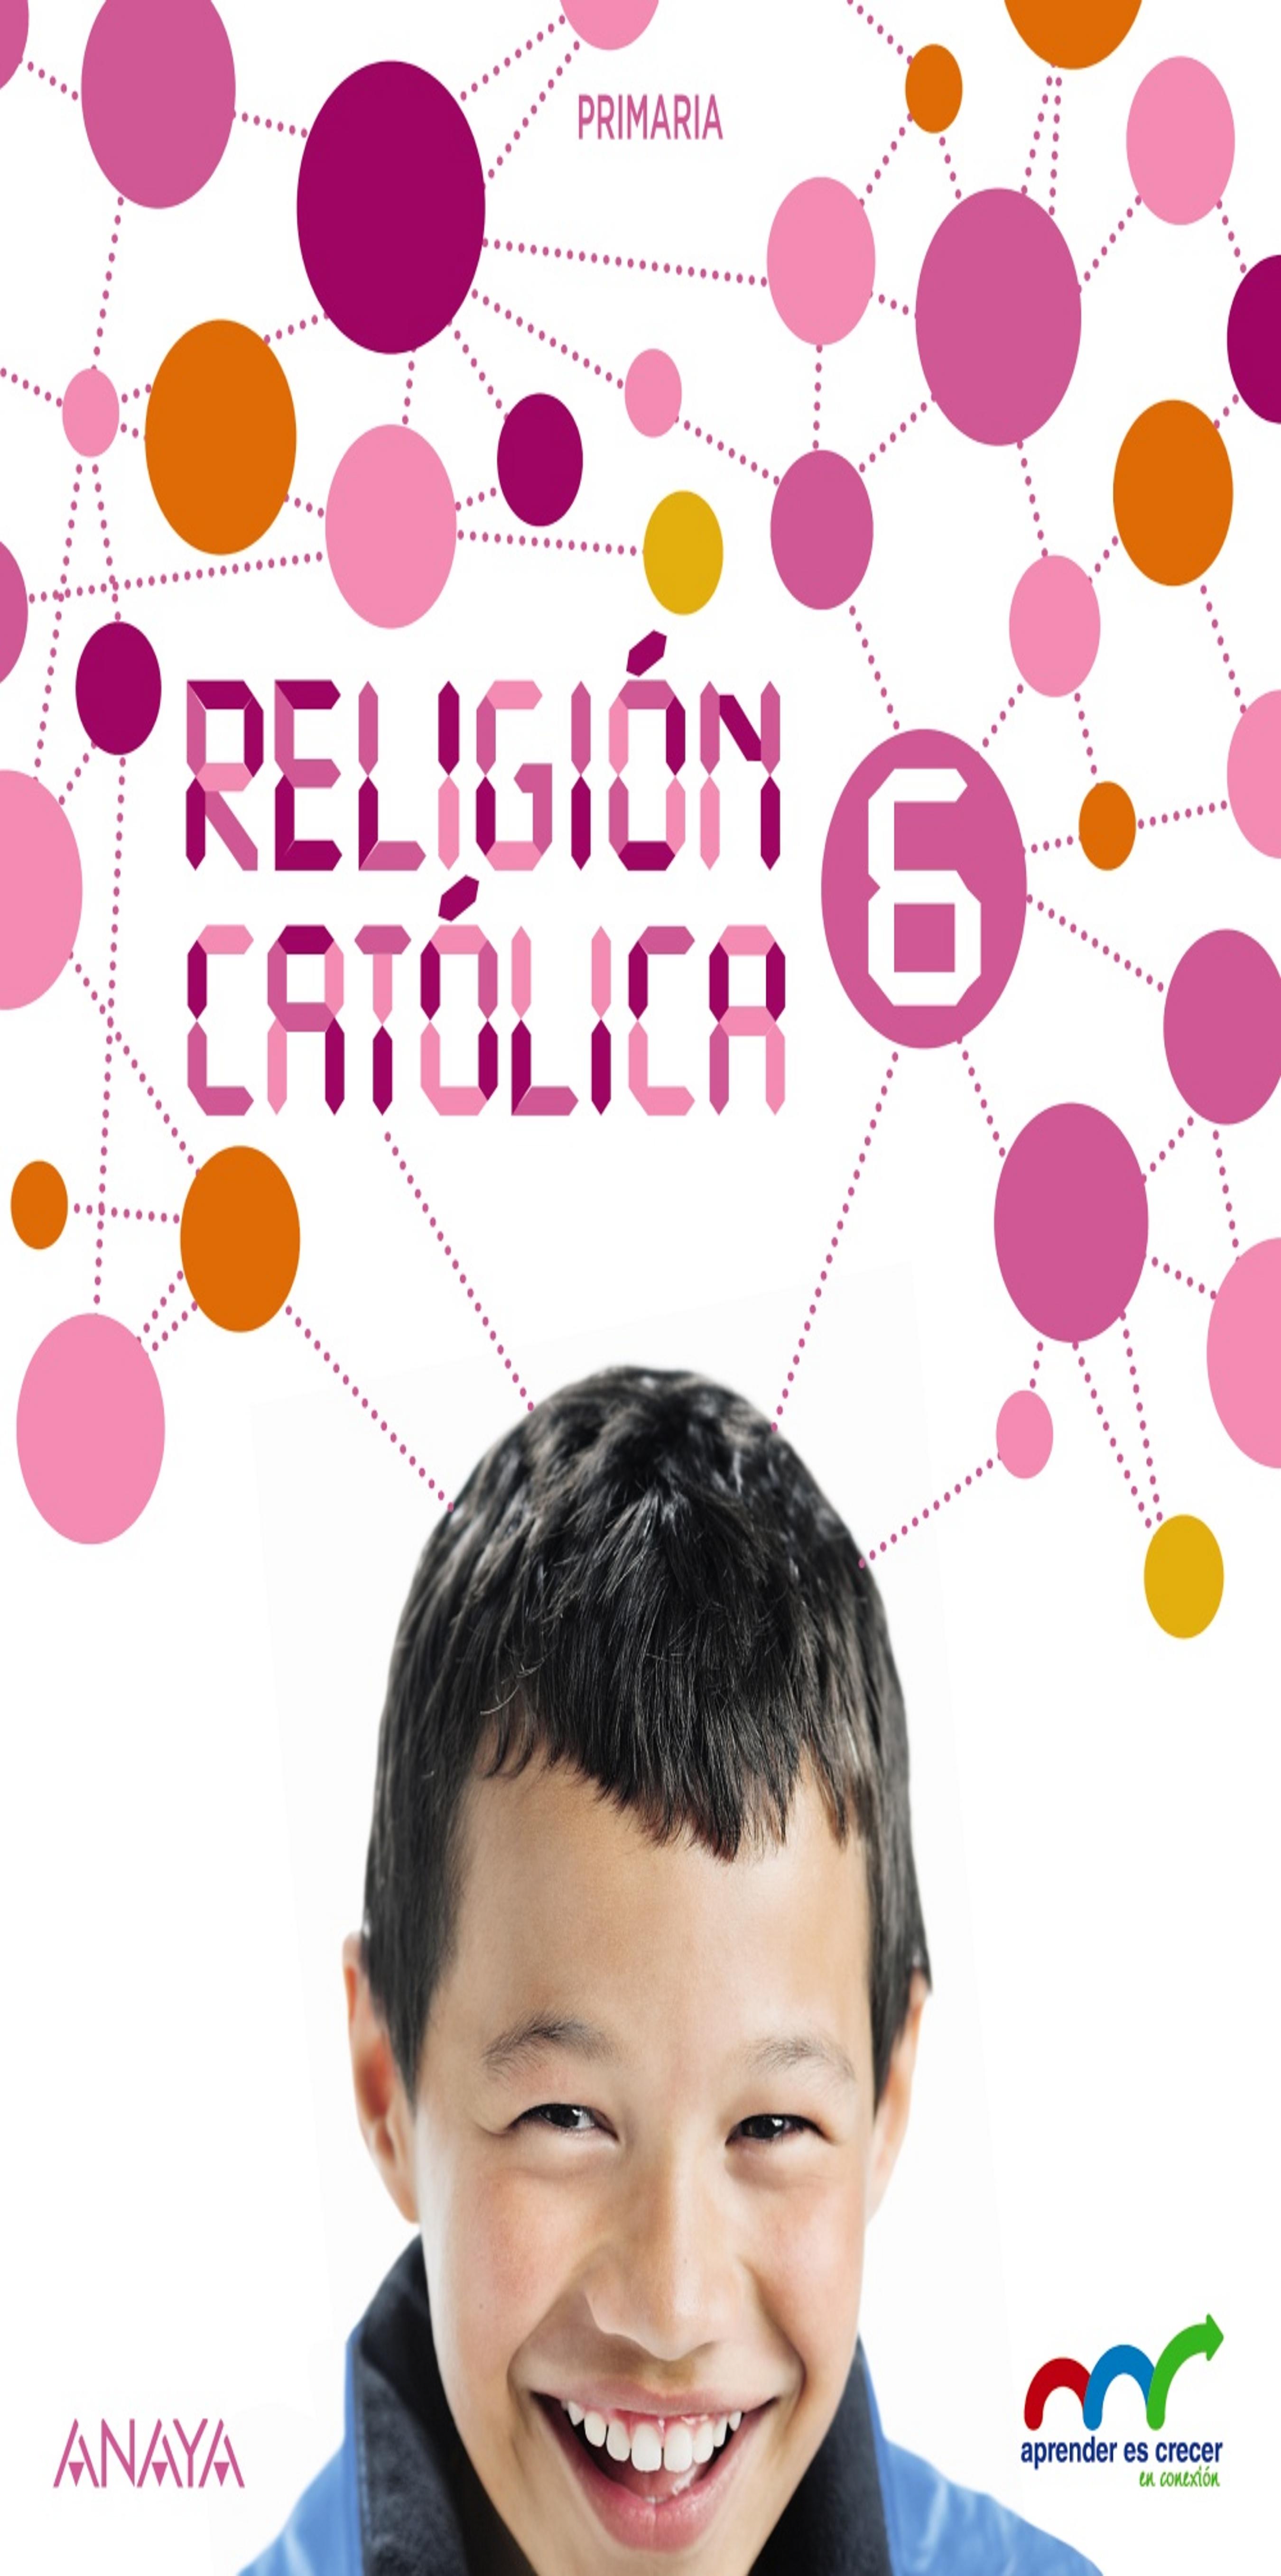 RELIGION 6 PRIM - Aprender es crecer